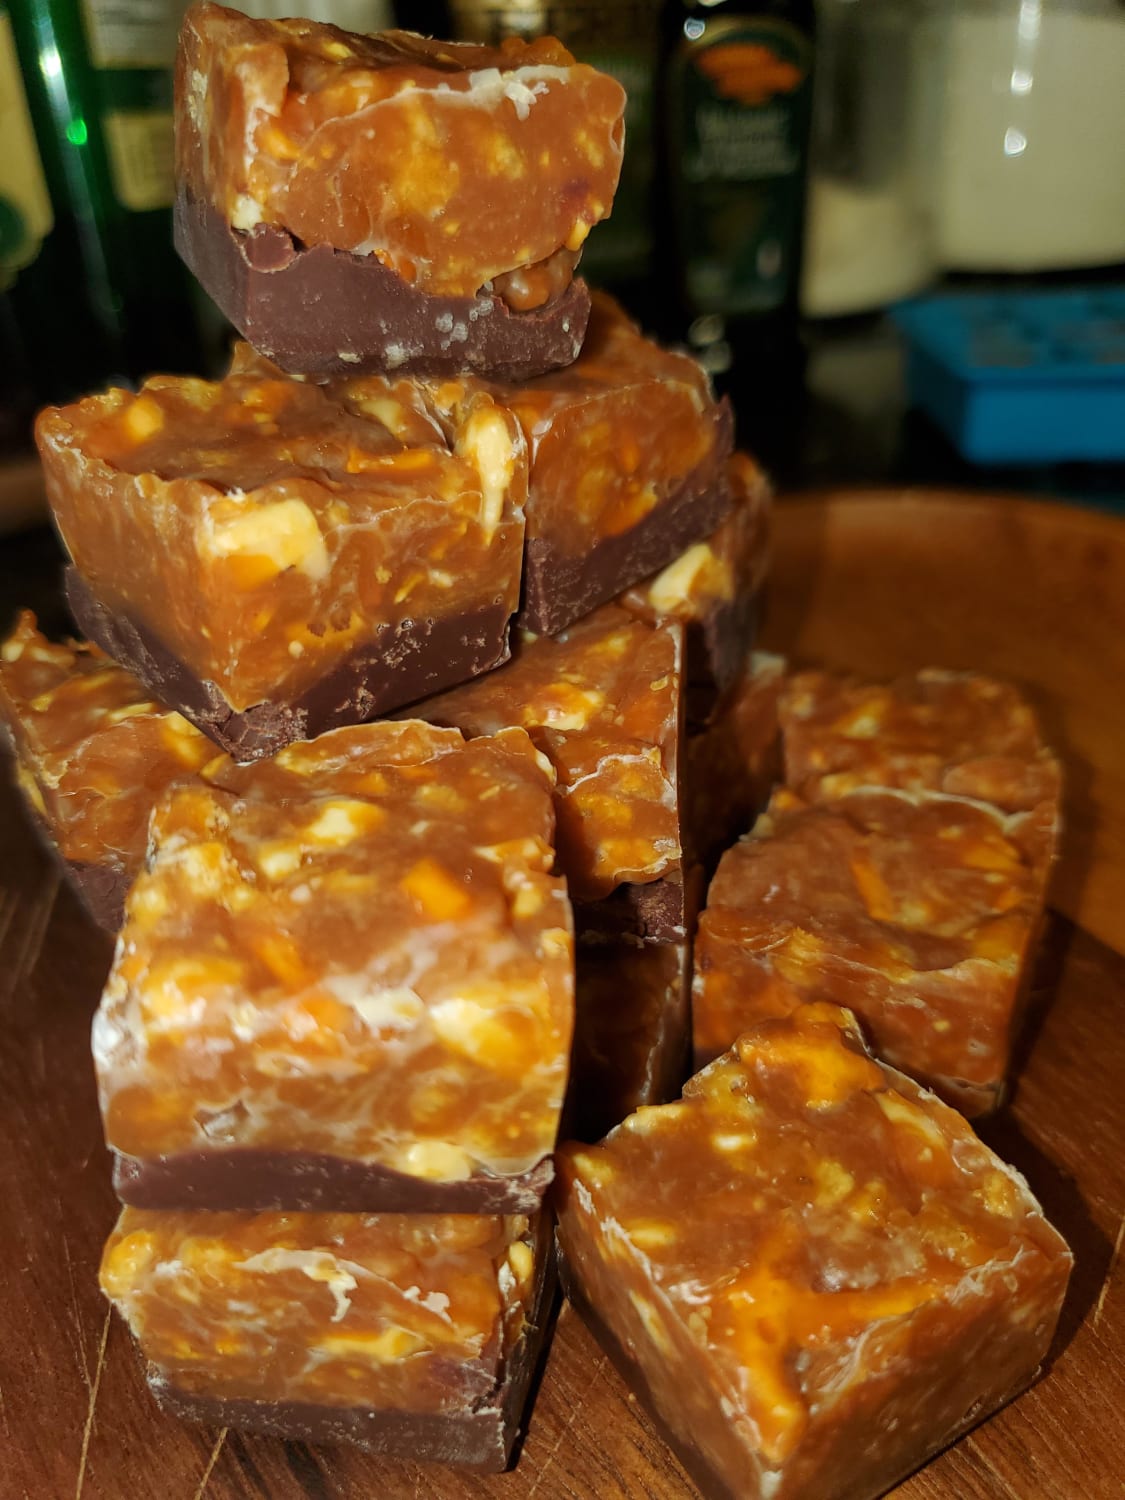 [HOMEMADE] salted caramel, pretzel and cashew topped truffle bites